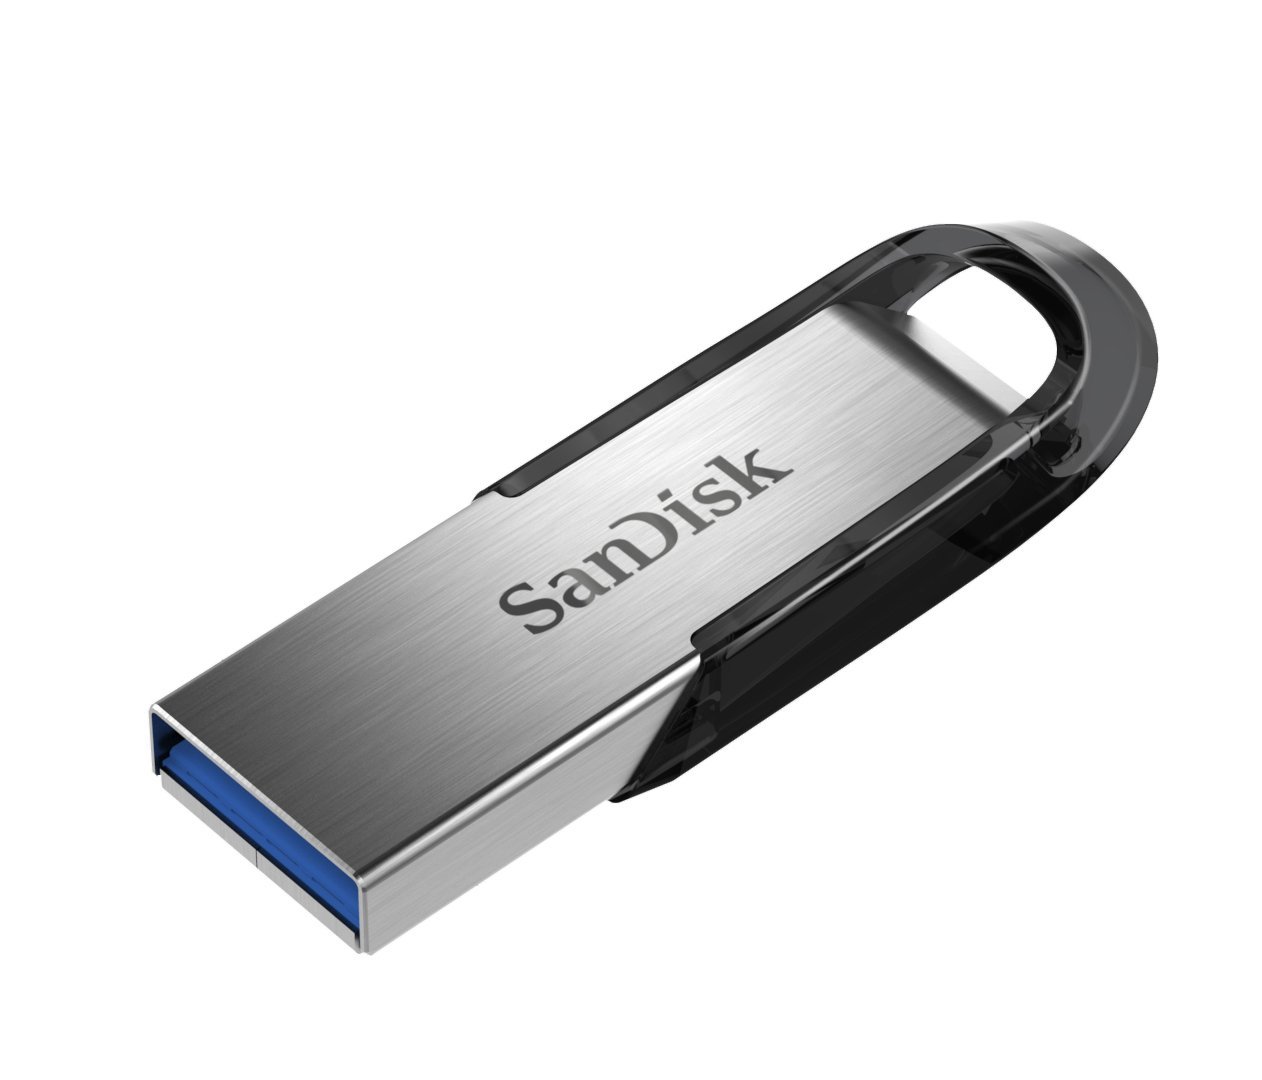 USB 3.0 128GB Sandisk solo 15,3€